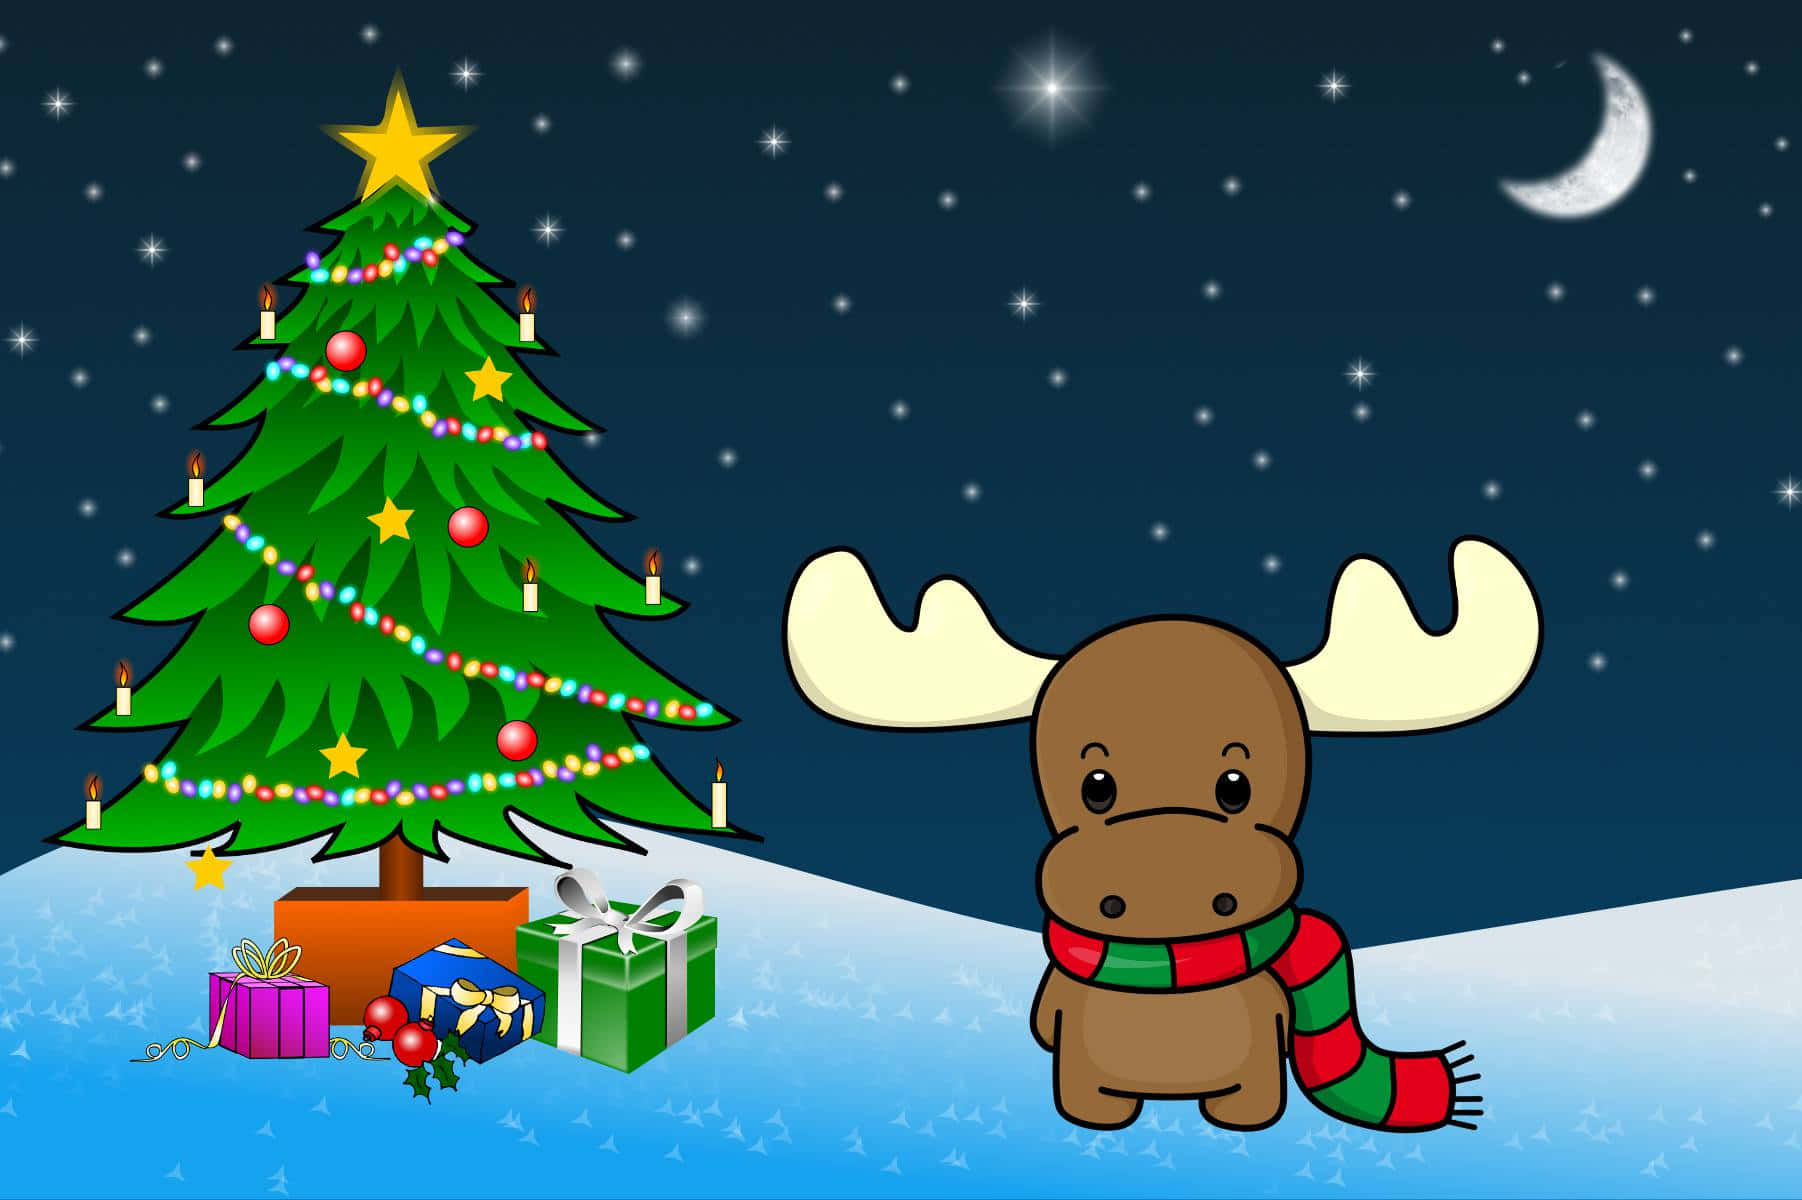 Free Christmas Cartoon Wallpaper Downloads, [100+] Christmas Cartoon  Wallpapers for FREE 